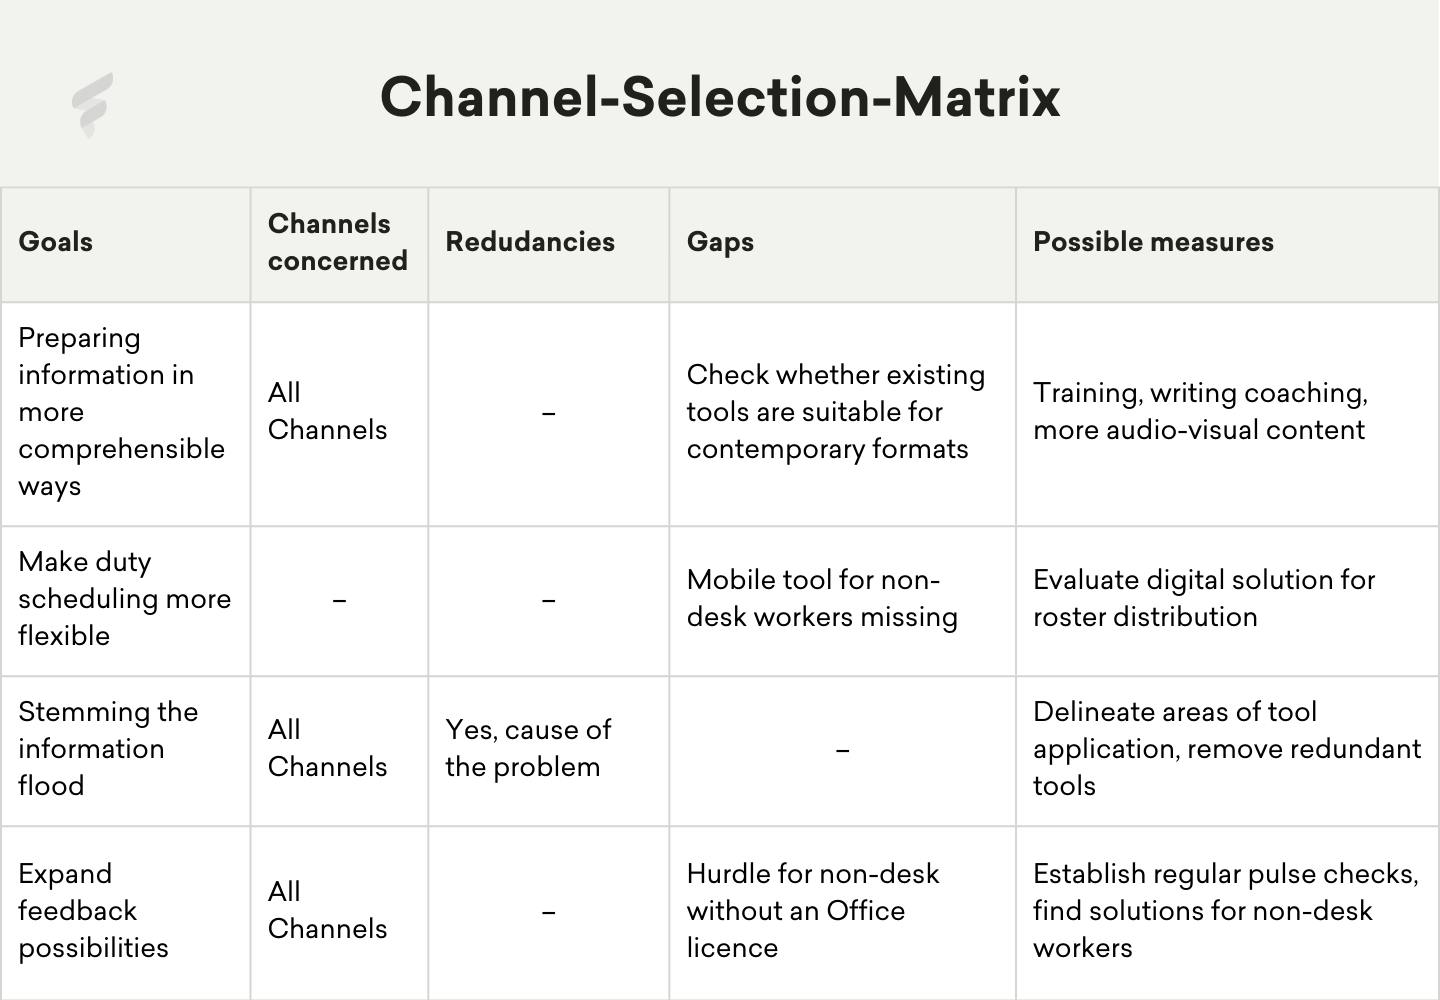 Improve internal communication: Channel-Selection-Matrix